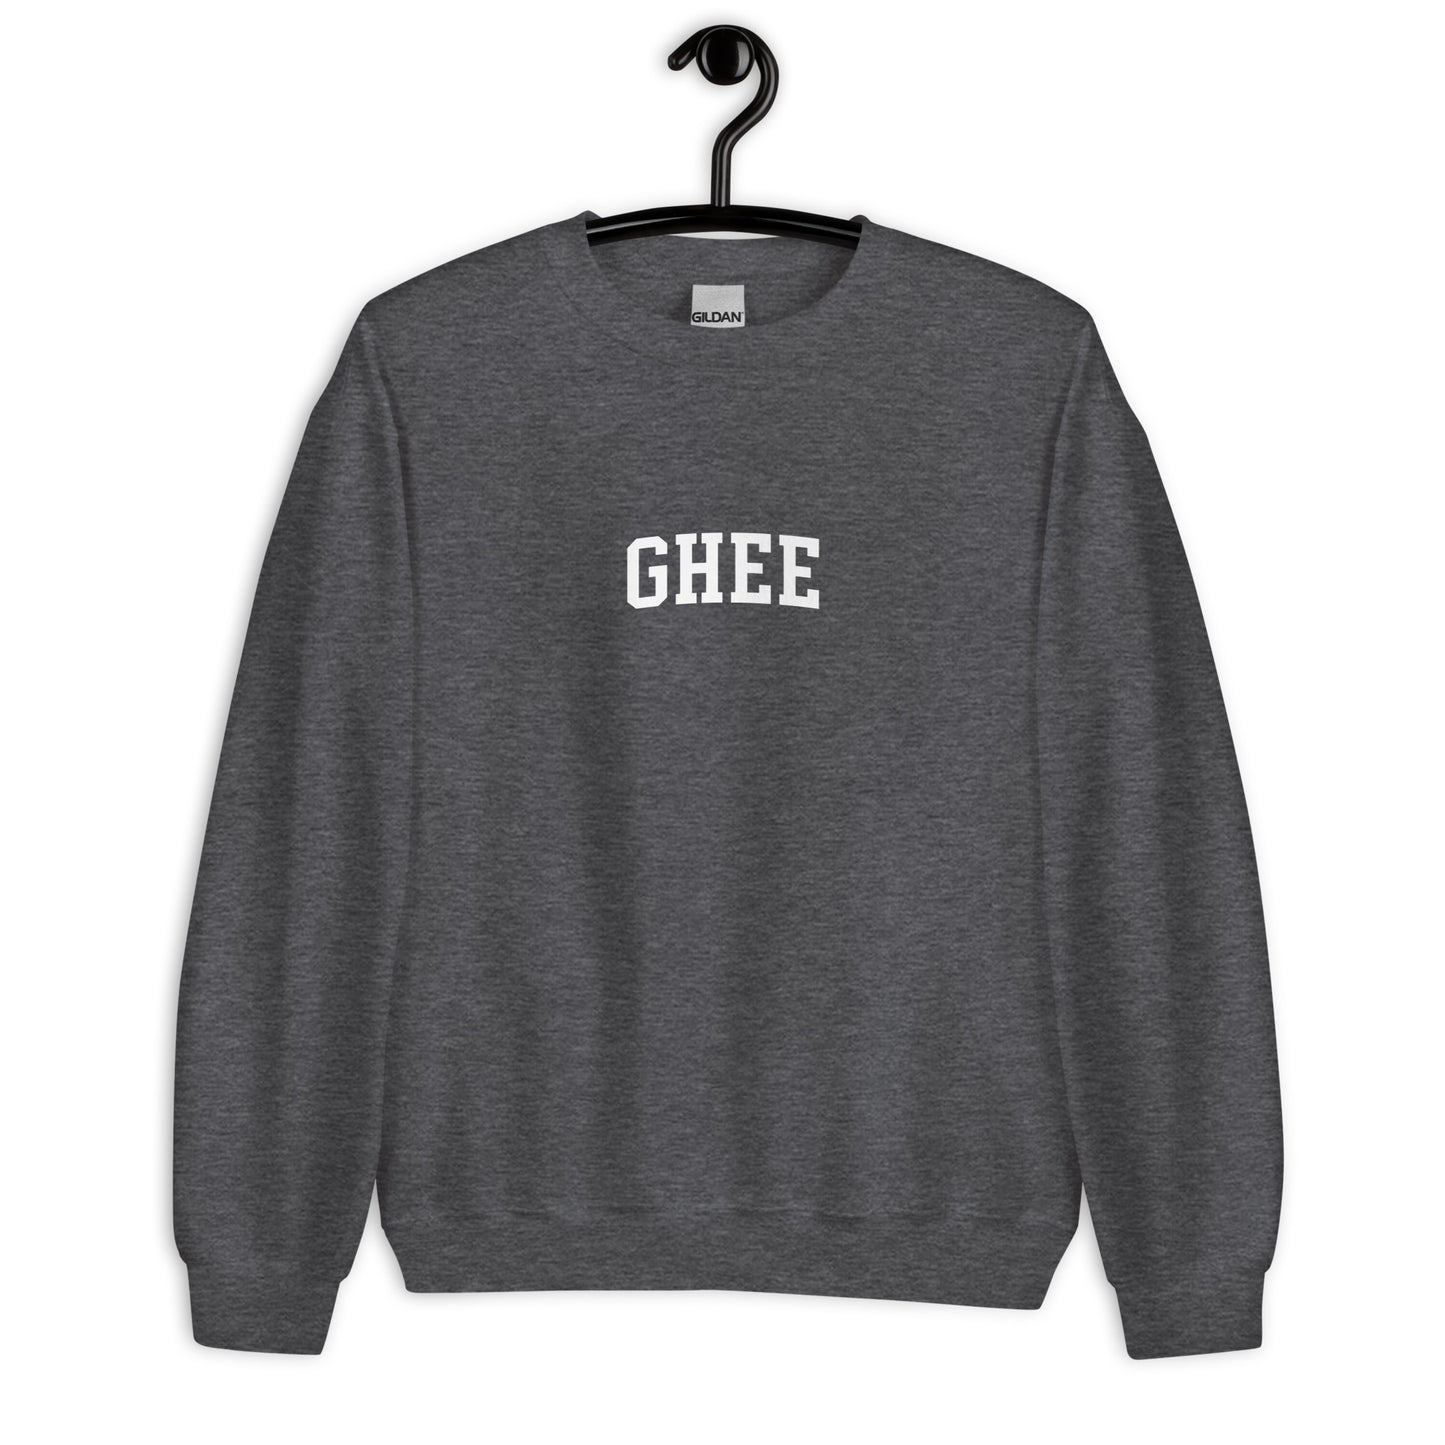 Ghee Sweatshirt - Arched Font